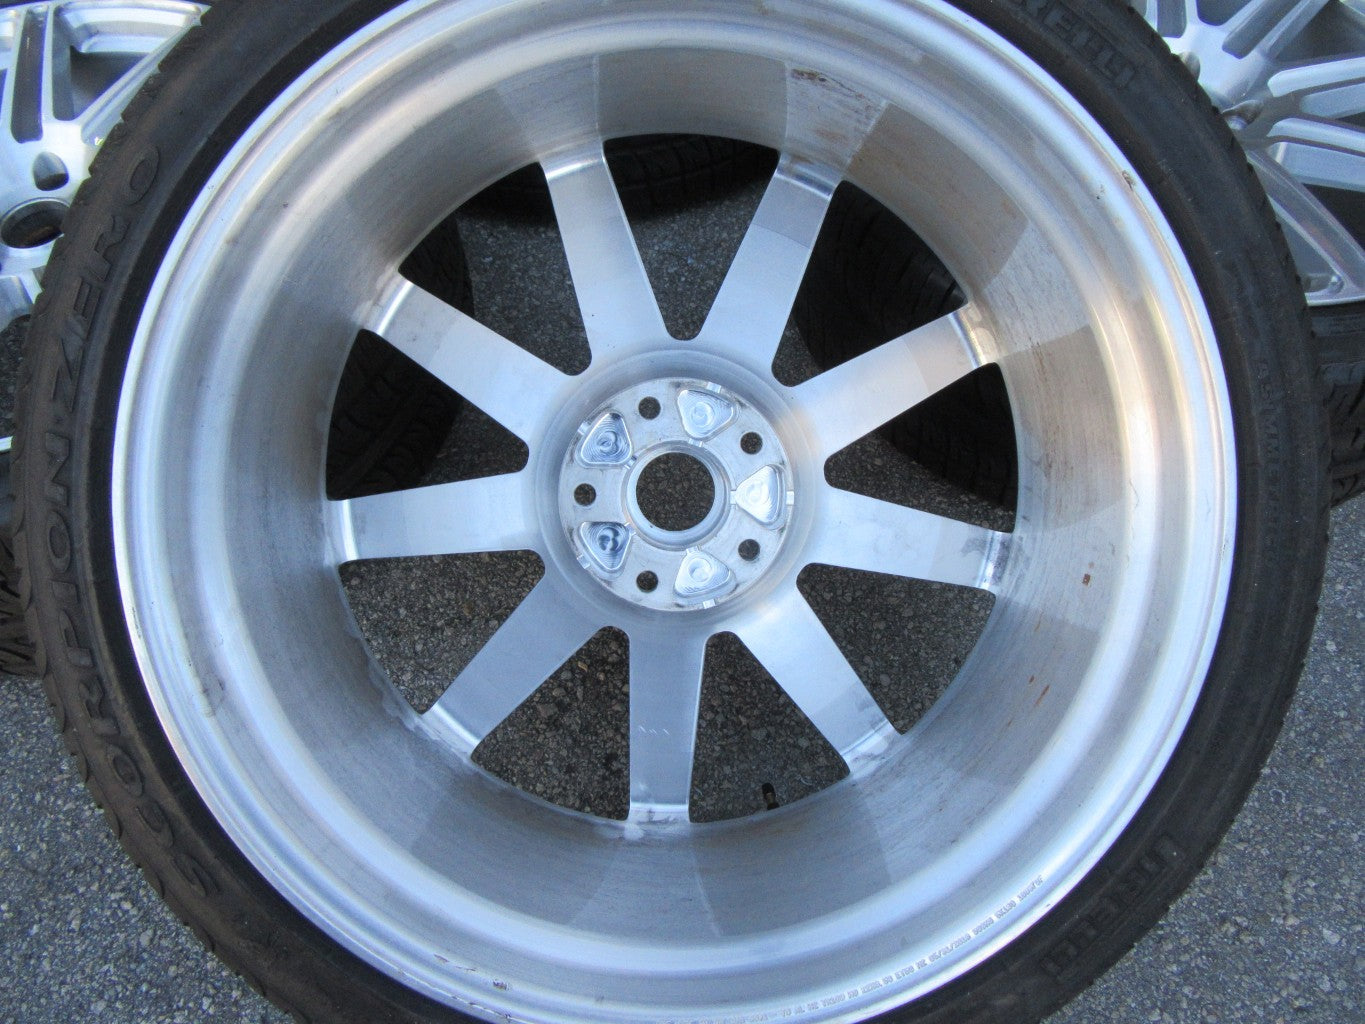 22" Bentley Mulsanne HRE rims tires wheels set of 4 #0360